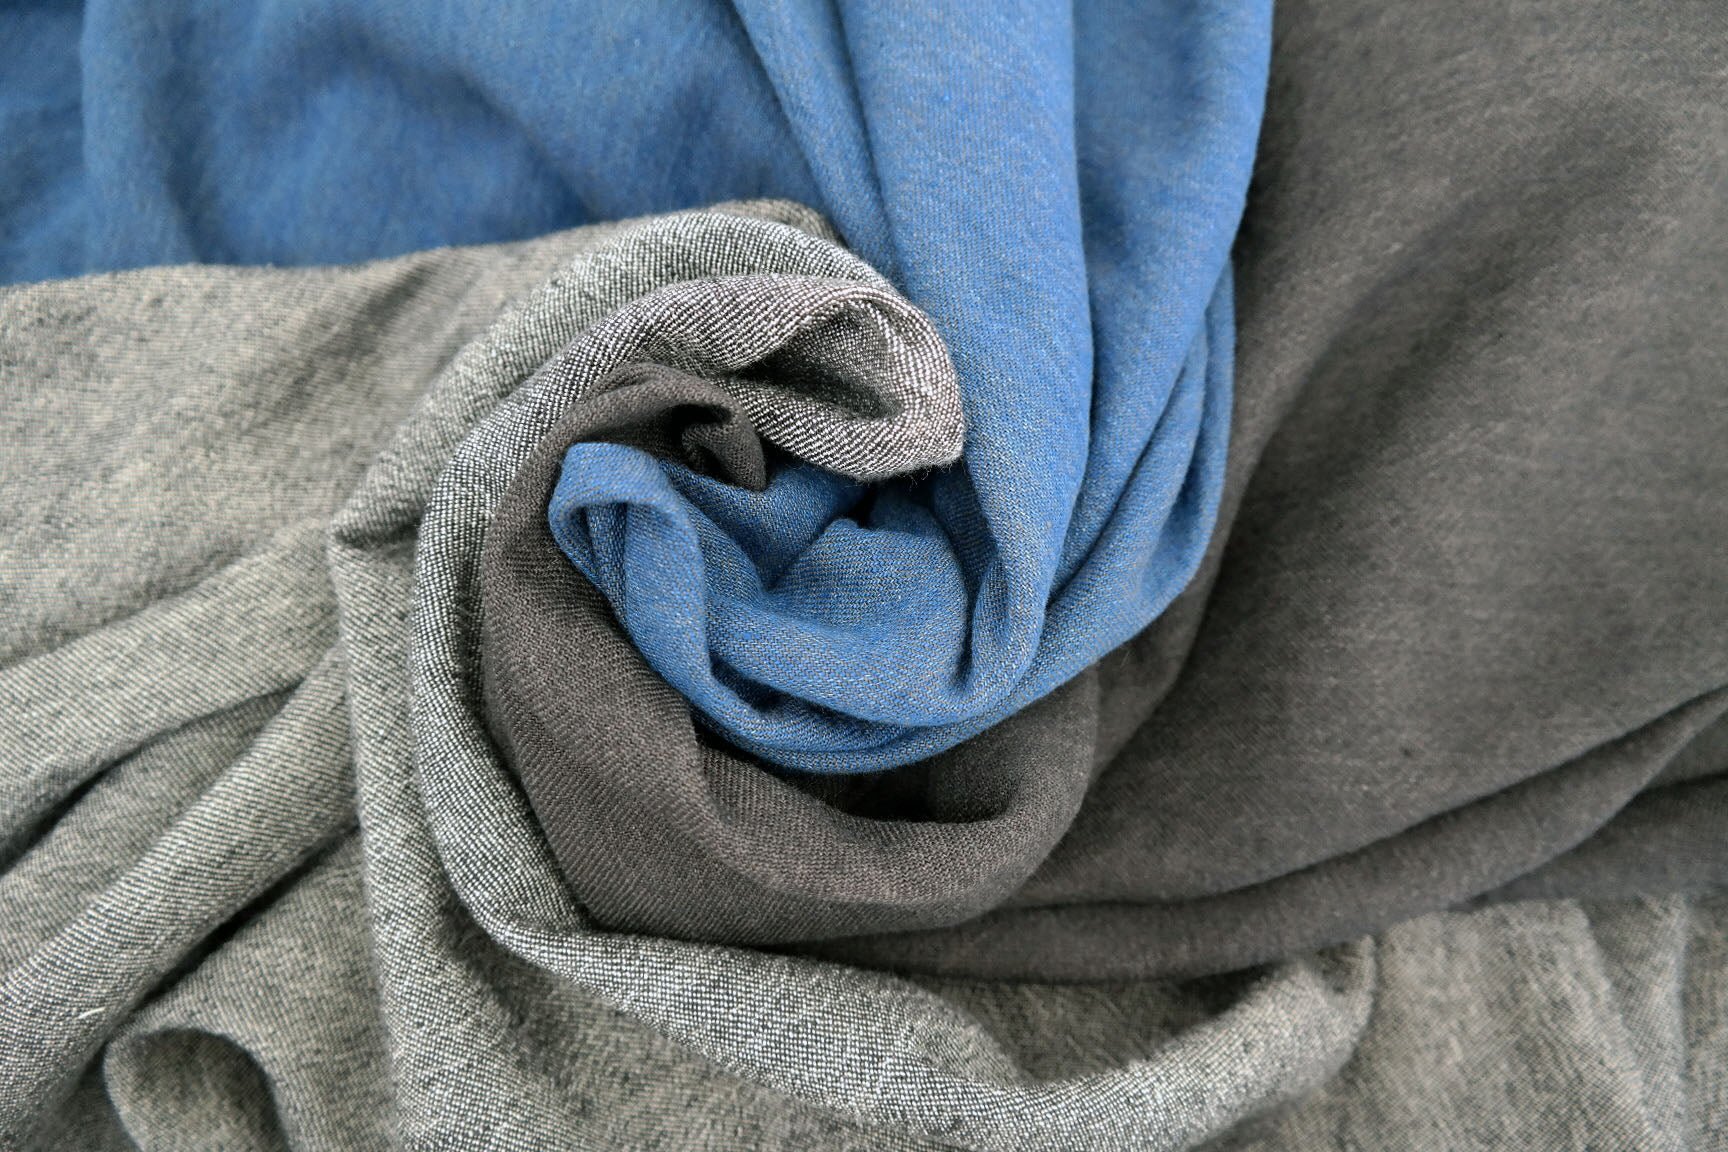 Linen Cotton Denim Twill Fabric (6913 6915 6916 6914) - The Linen Lab - navy